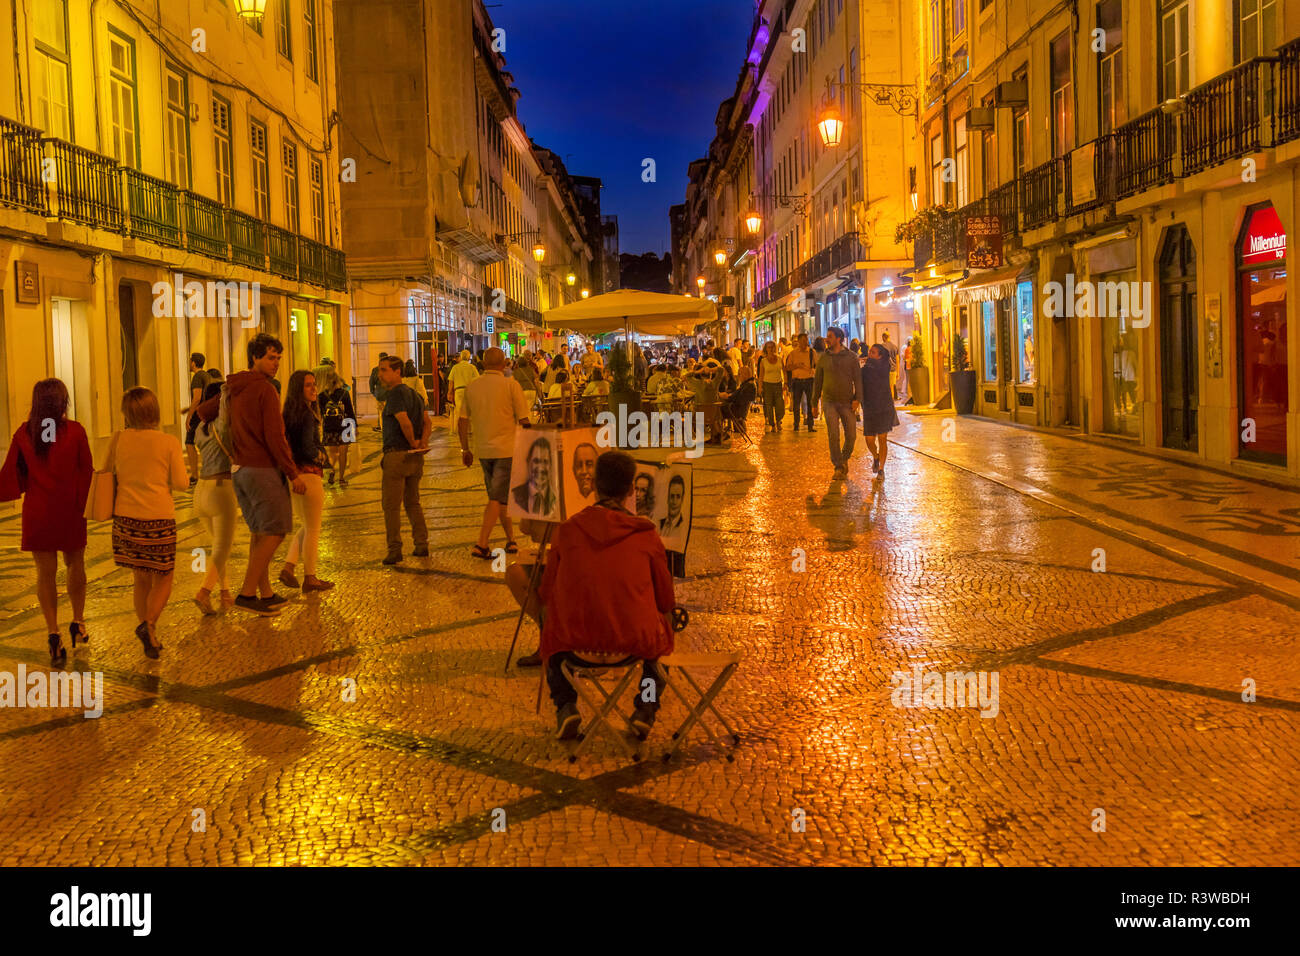 Street Artist Shoppers Rua Augusta, shops and restaurants, street with black and white tiles, Baixa, Lisbon, Portugal. Stock Photo